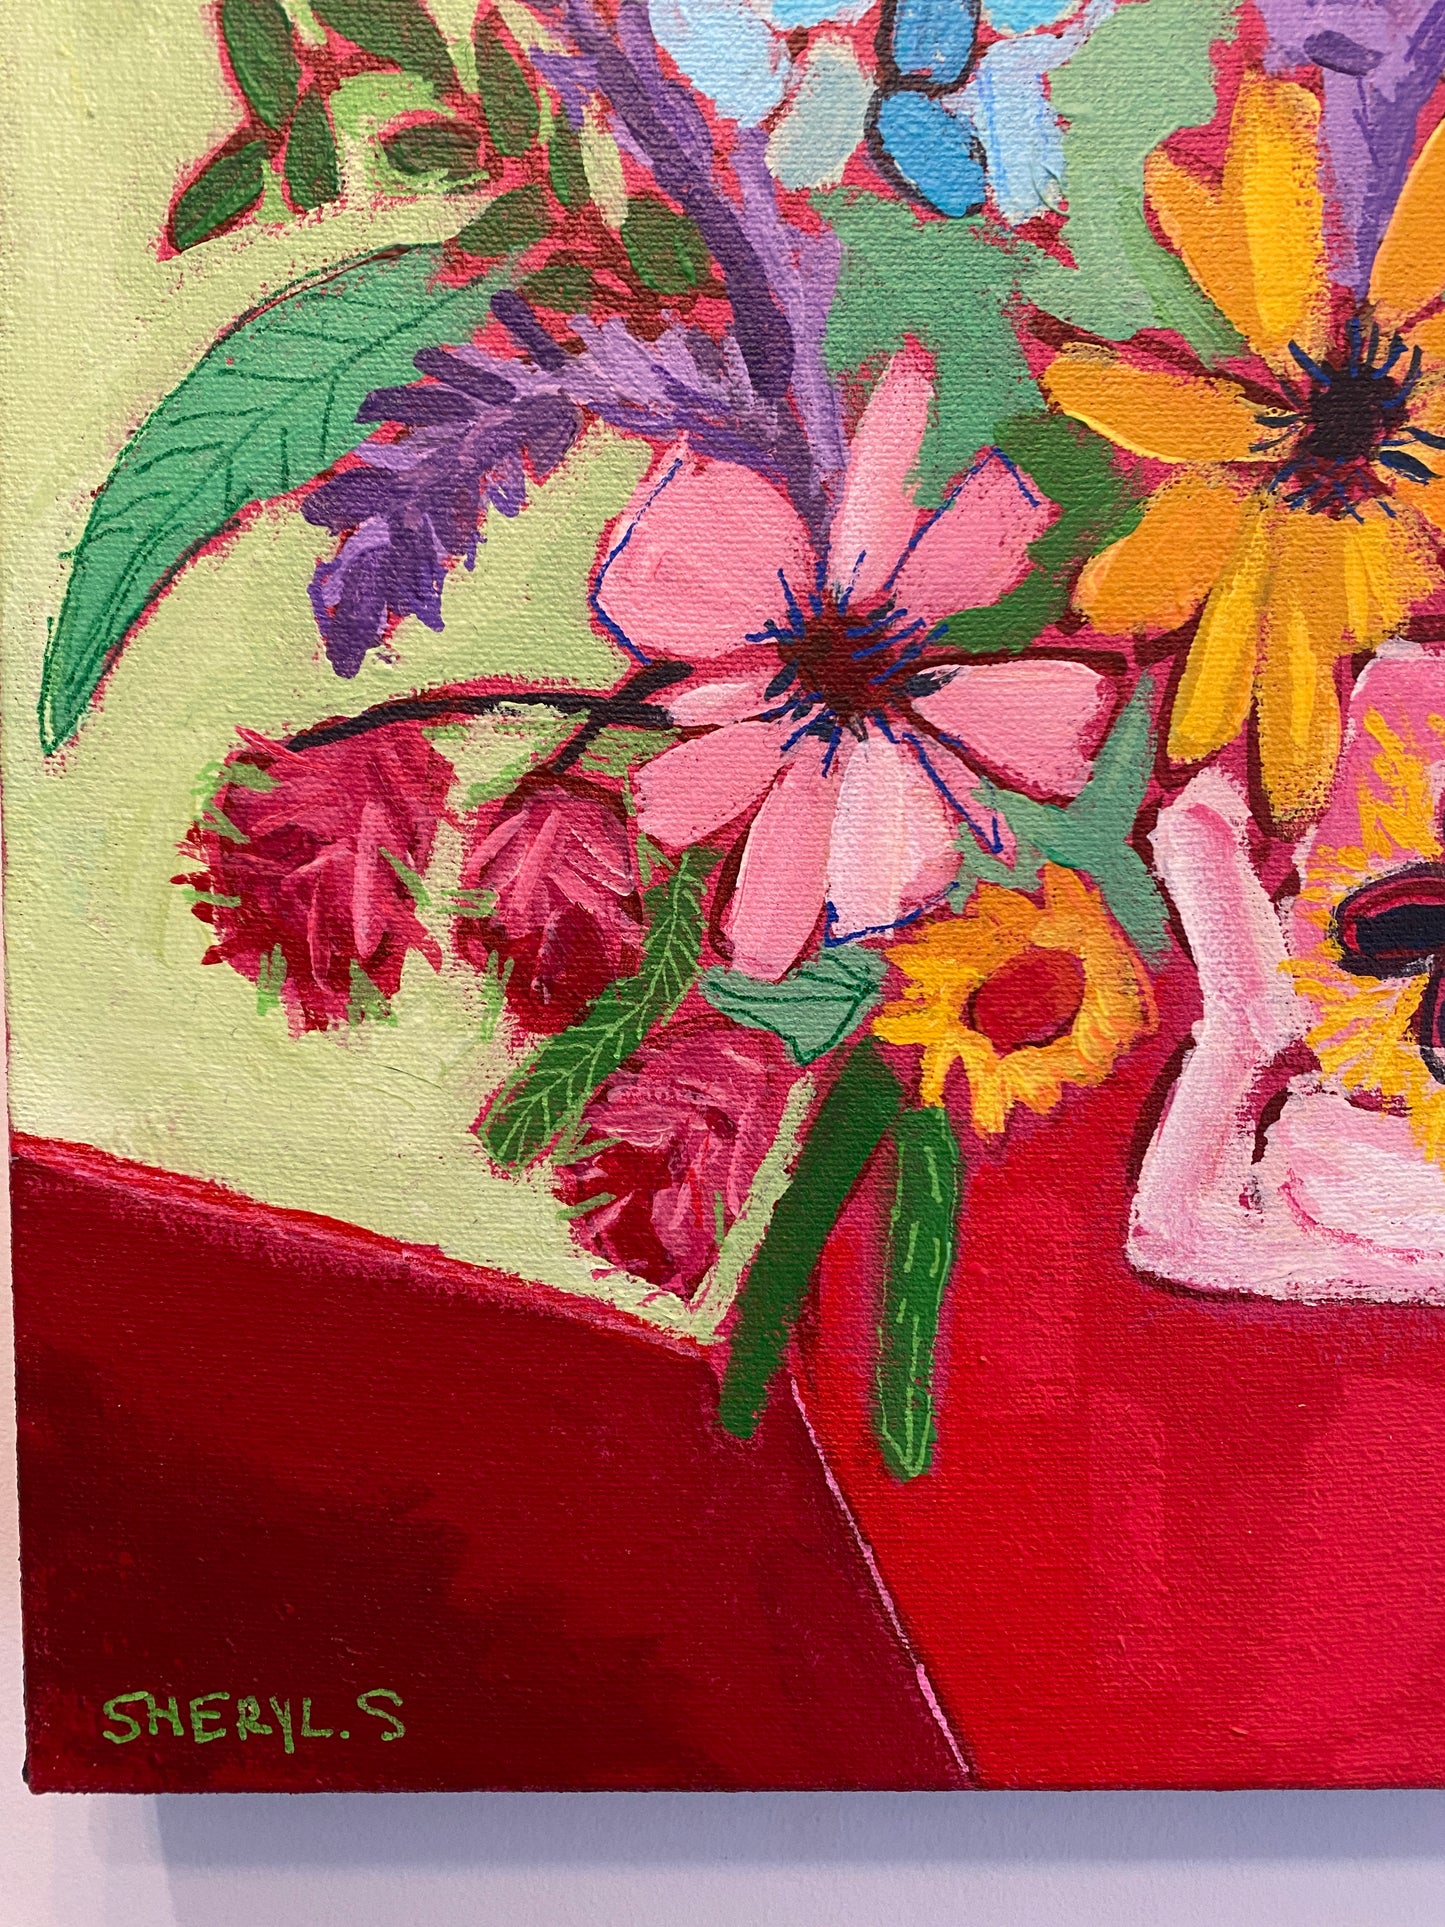 Original Wall Art / Cut Flowers in a Red Vase / Green Blue Purple / Modern Floral